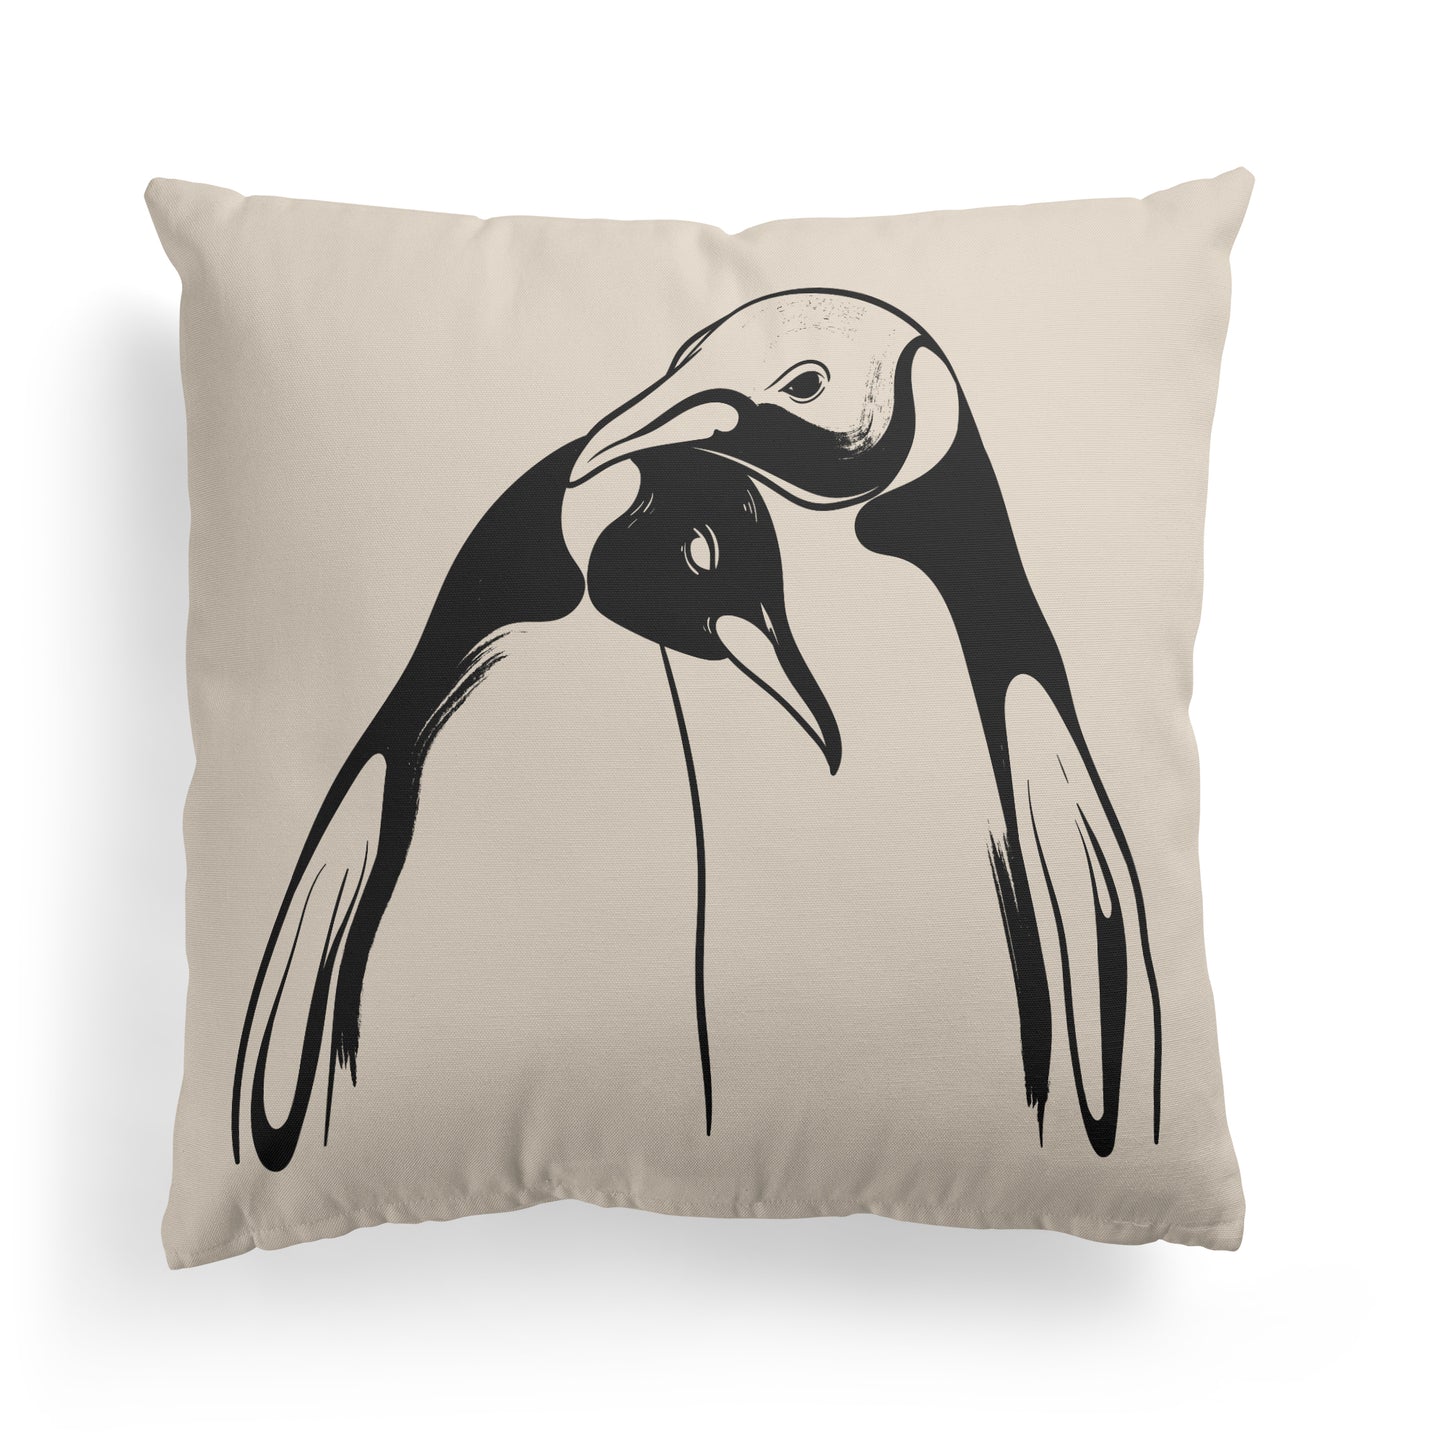 Penguins Love, Cute Animal Throw Pillow